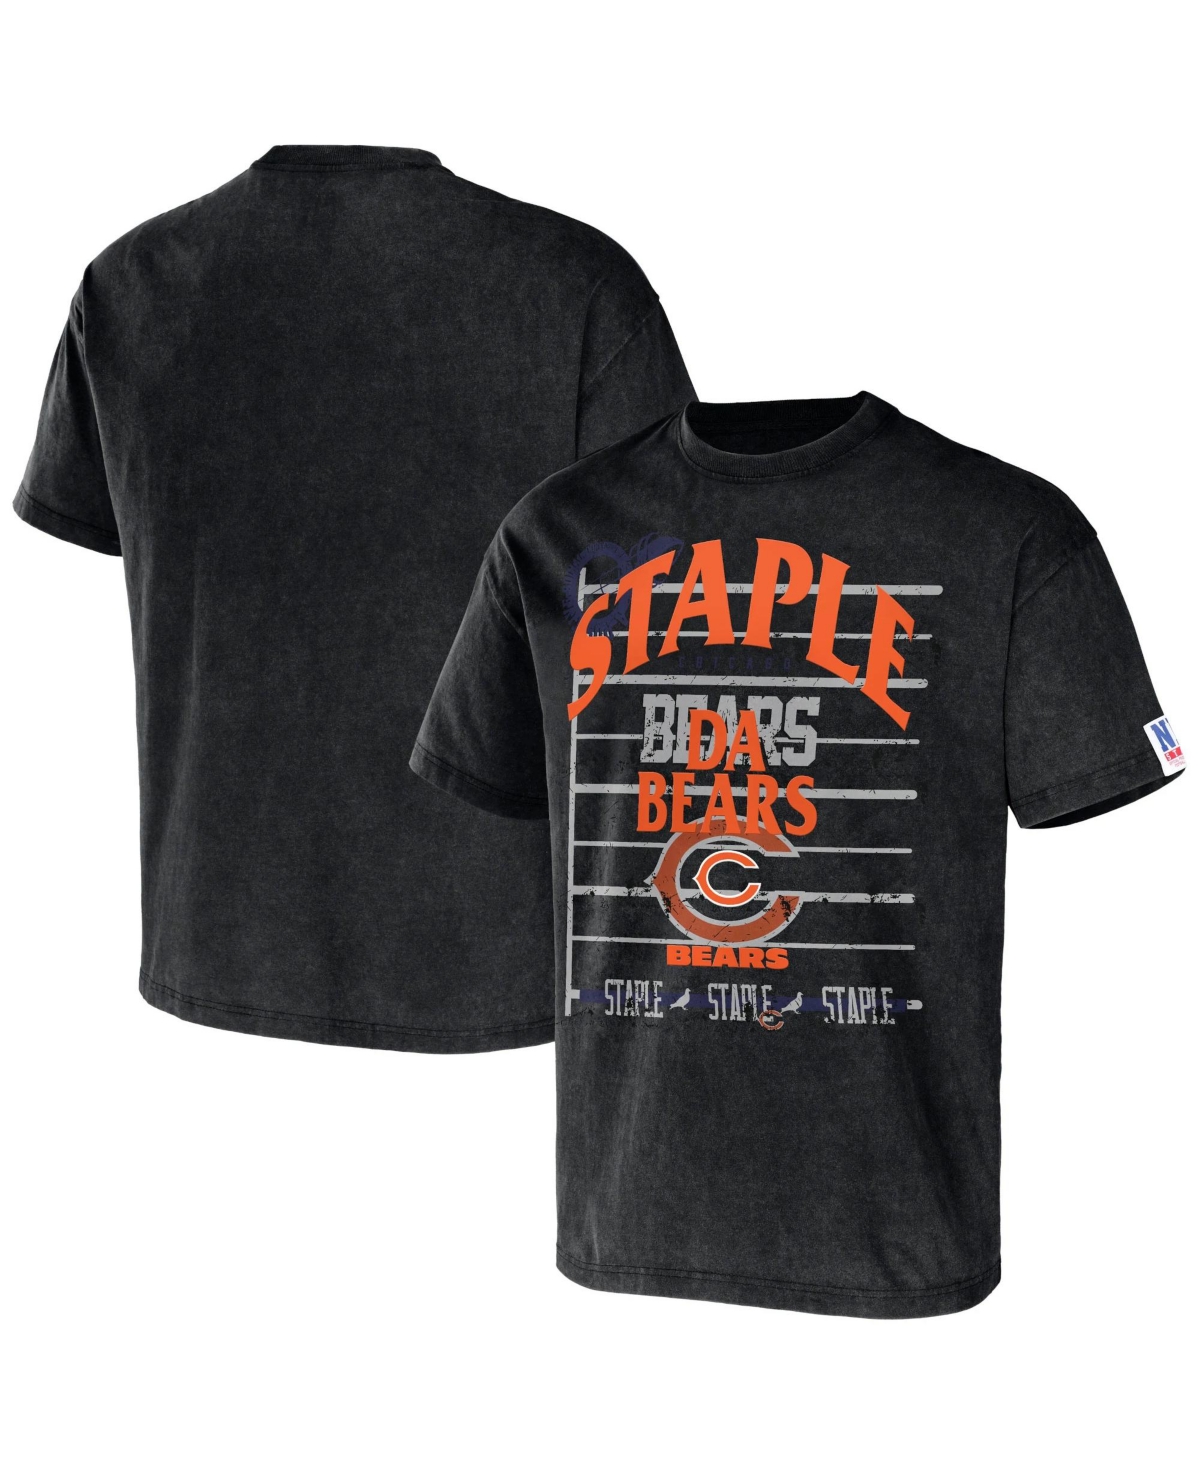 Men's Nfl X Staple Black Chicago Bears Gridiron Short Sleeve T-shirt - Black